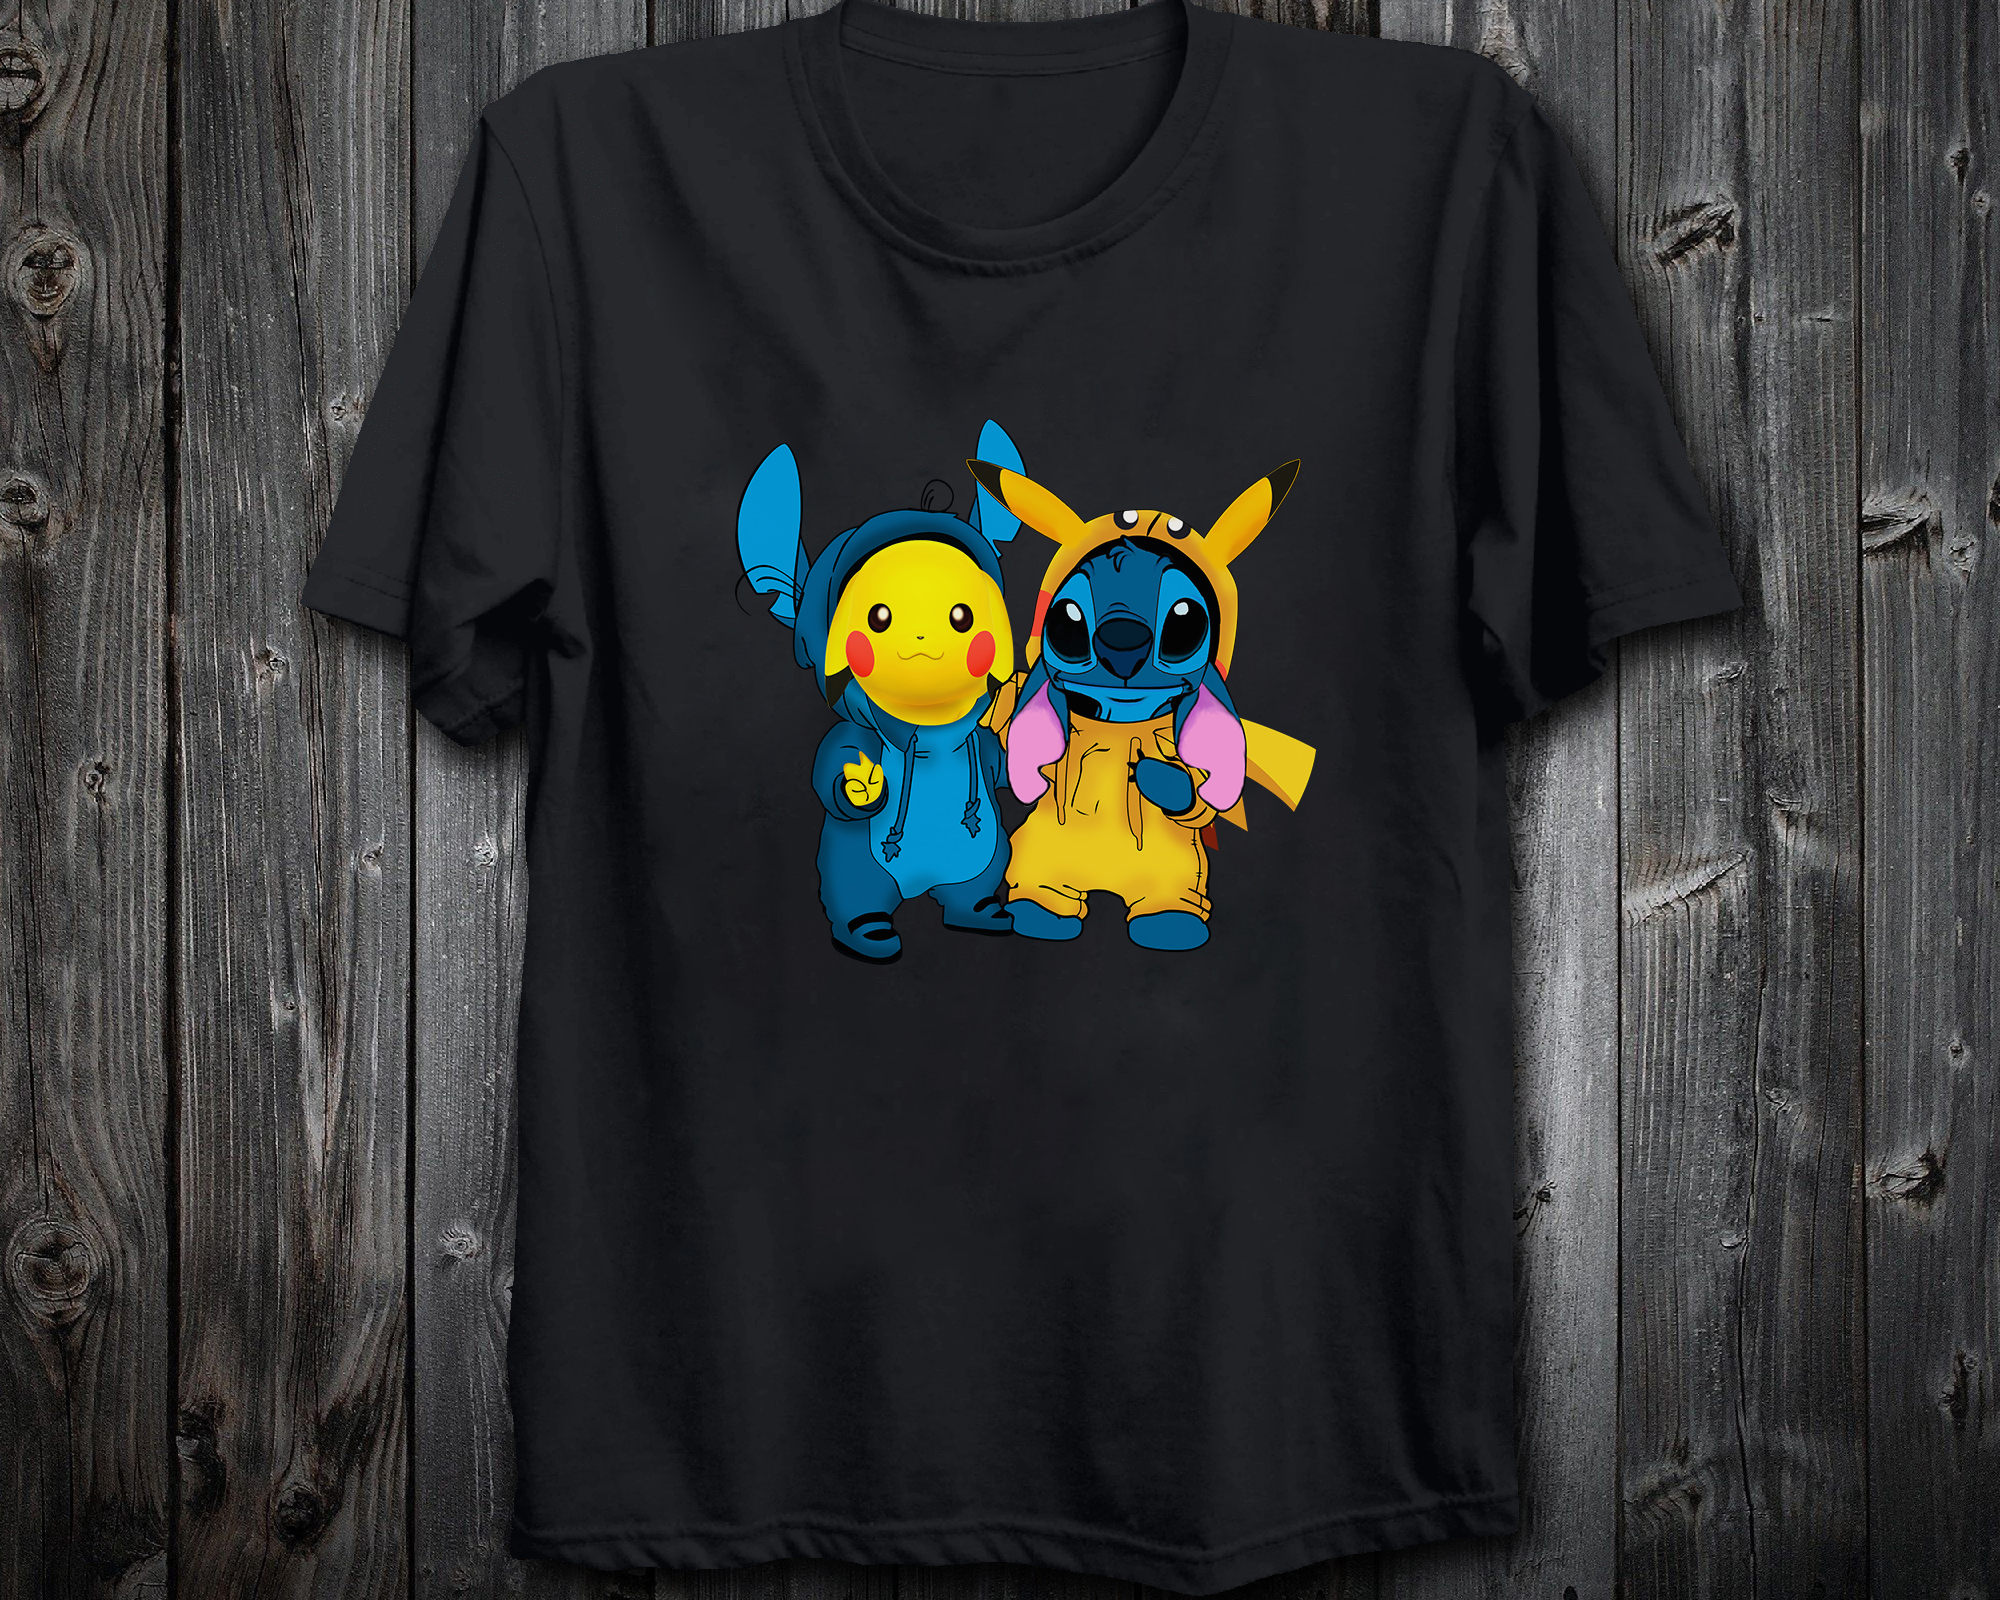 Disney Stitch and Pikachu Costume Best Friends Unisex Gift T-Shirt Shirt Gift For Men Women, Funny Disney Shirt, Stitch Shirt, Pikachu Shirt